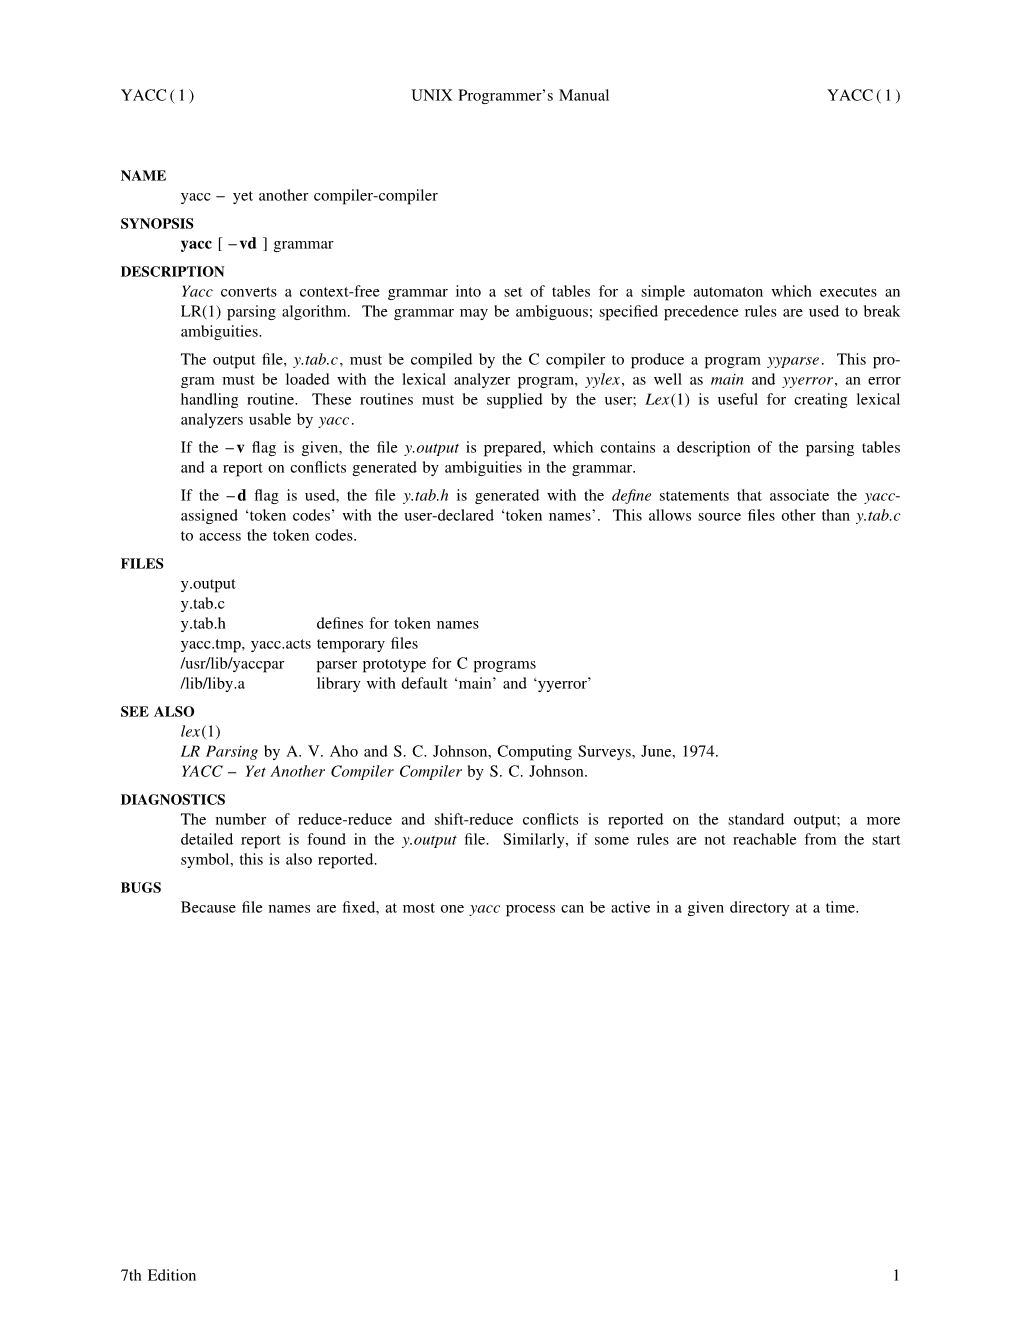 UNIX Programmer's Manual YACC (